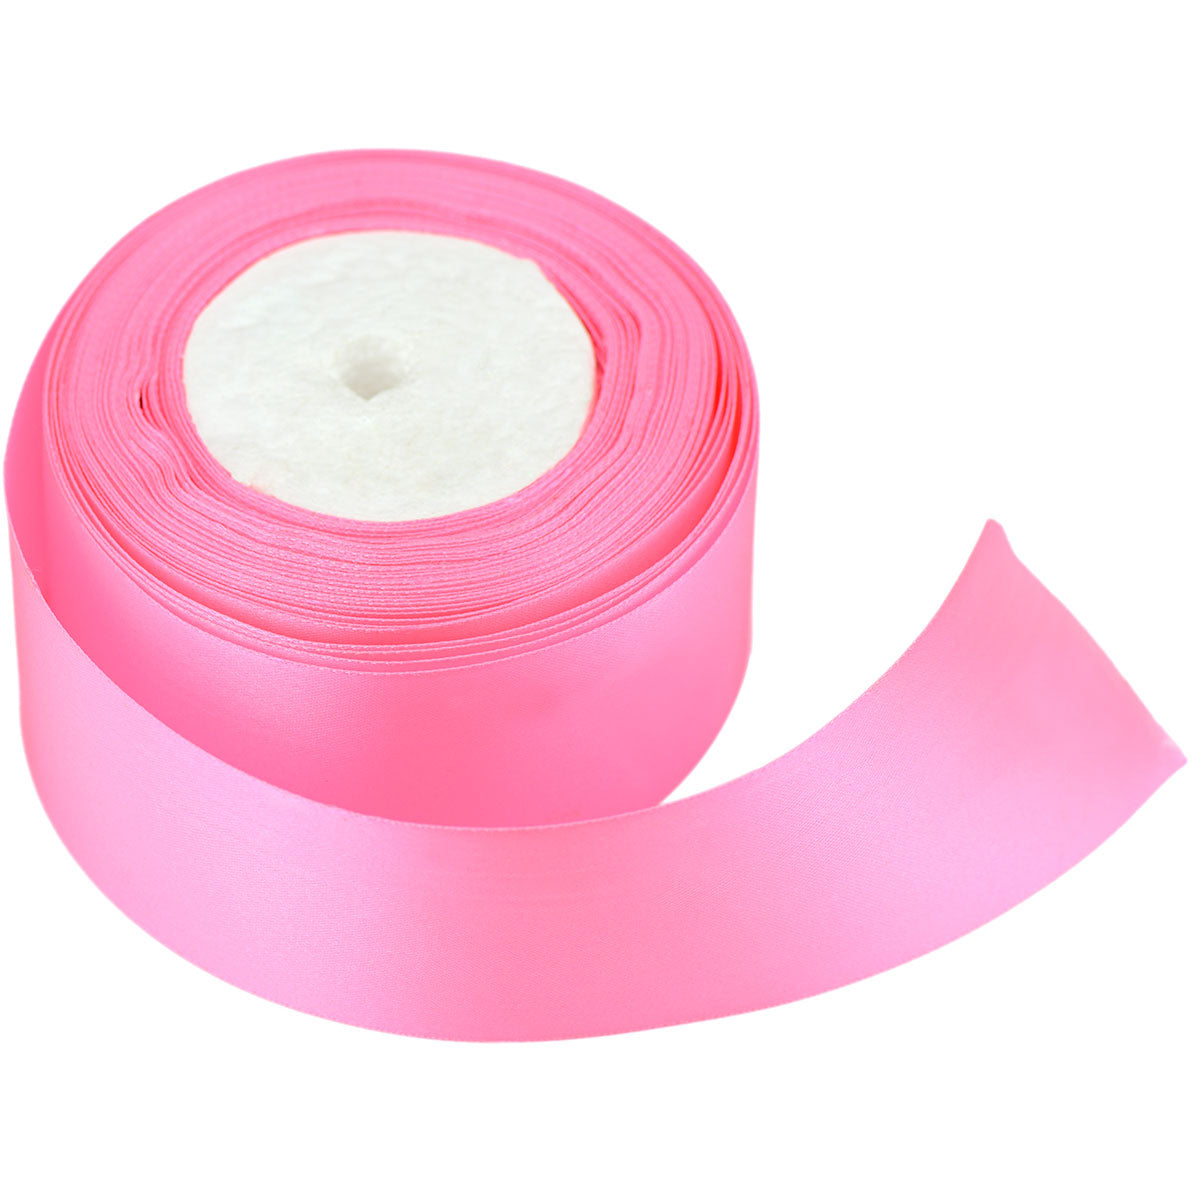 40mm Pink Single Sided Satin Ribbon